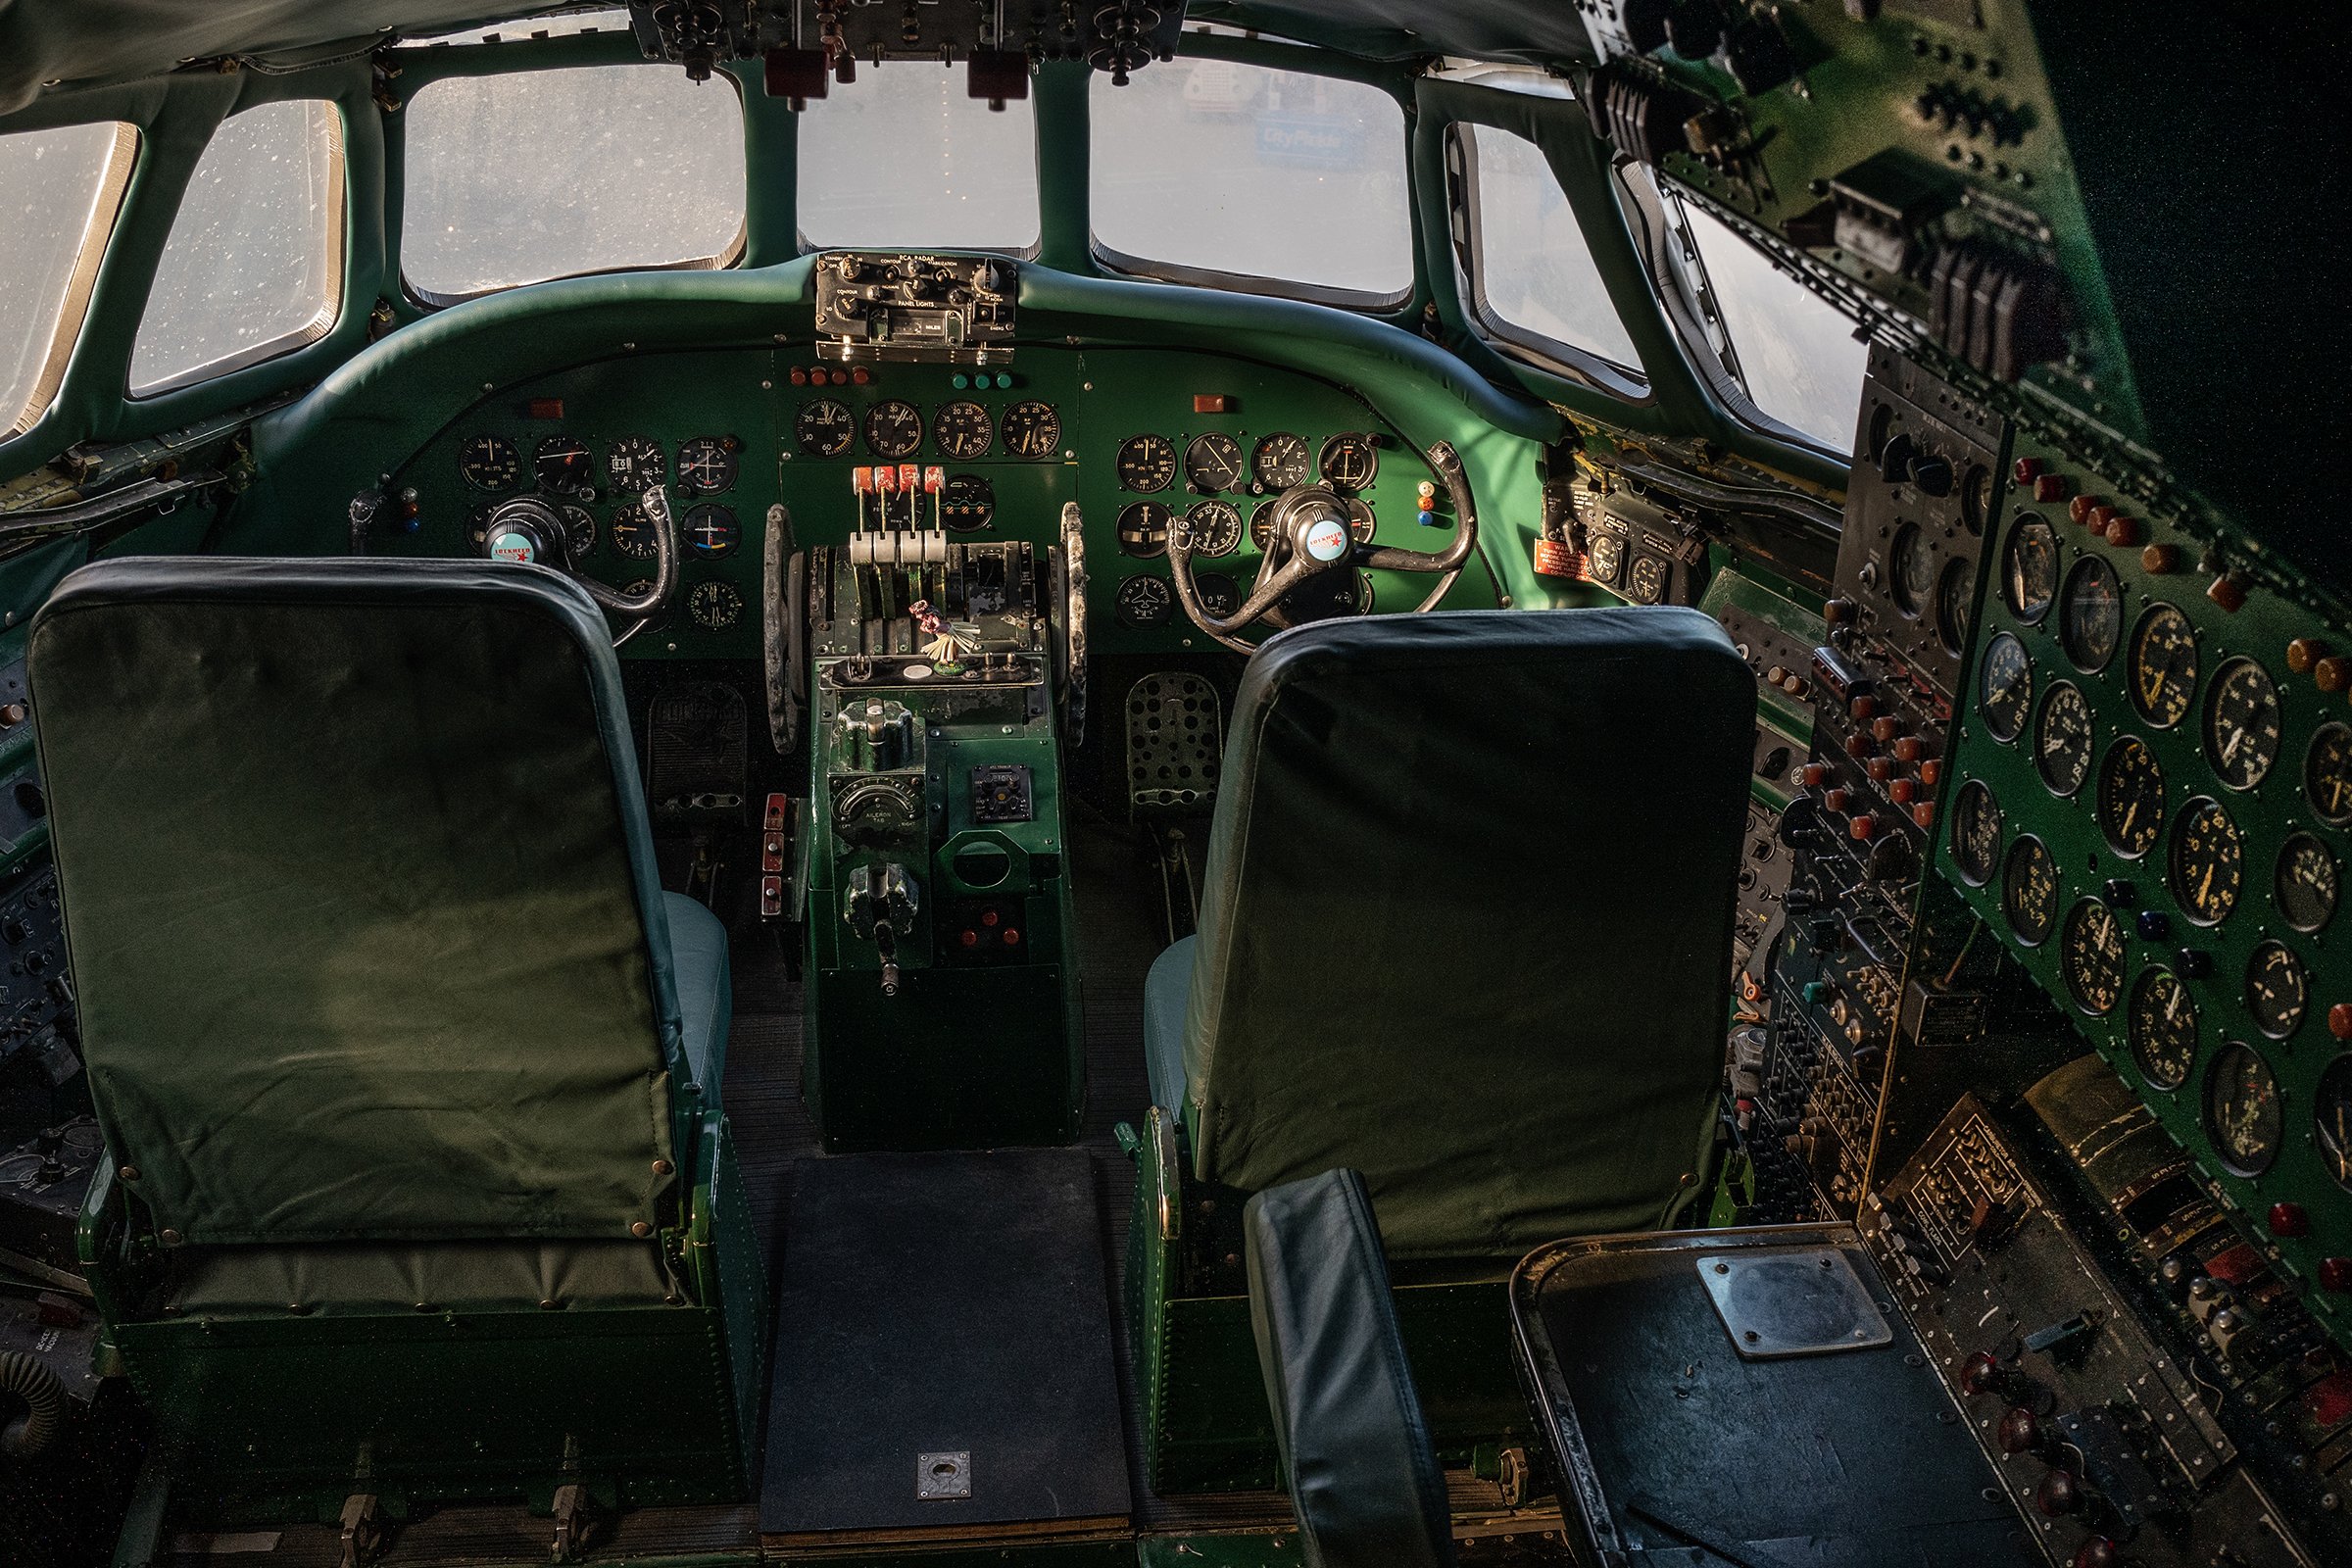 TWA Connie Cockpit